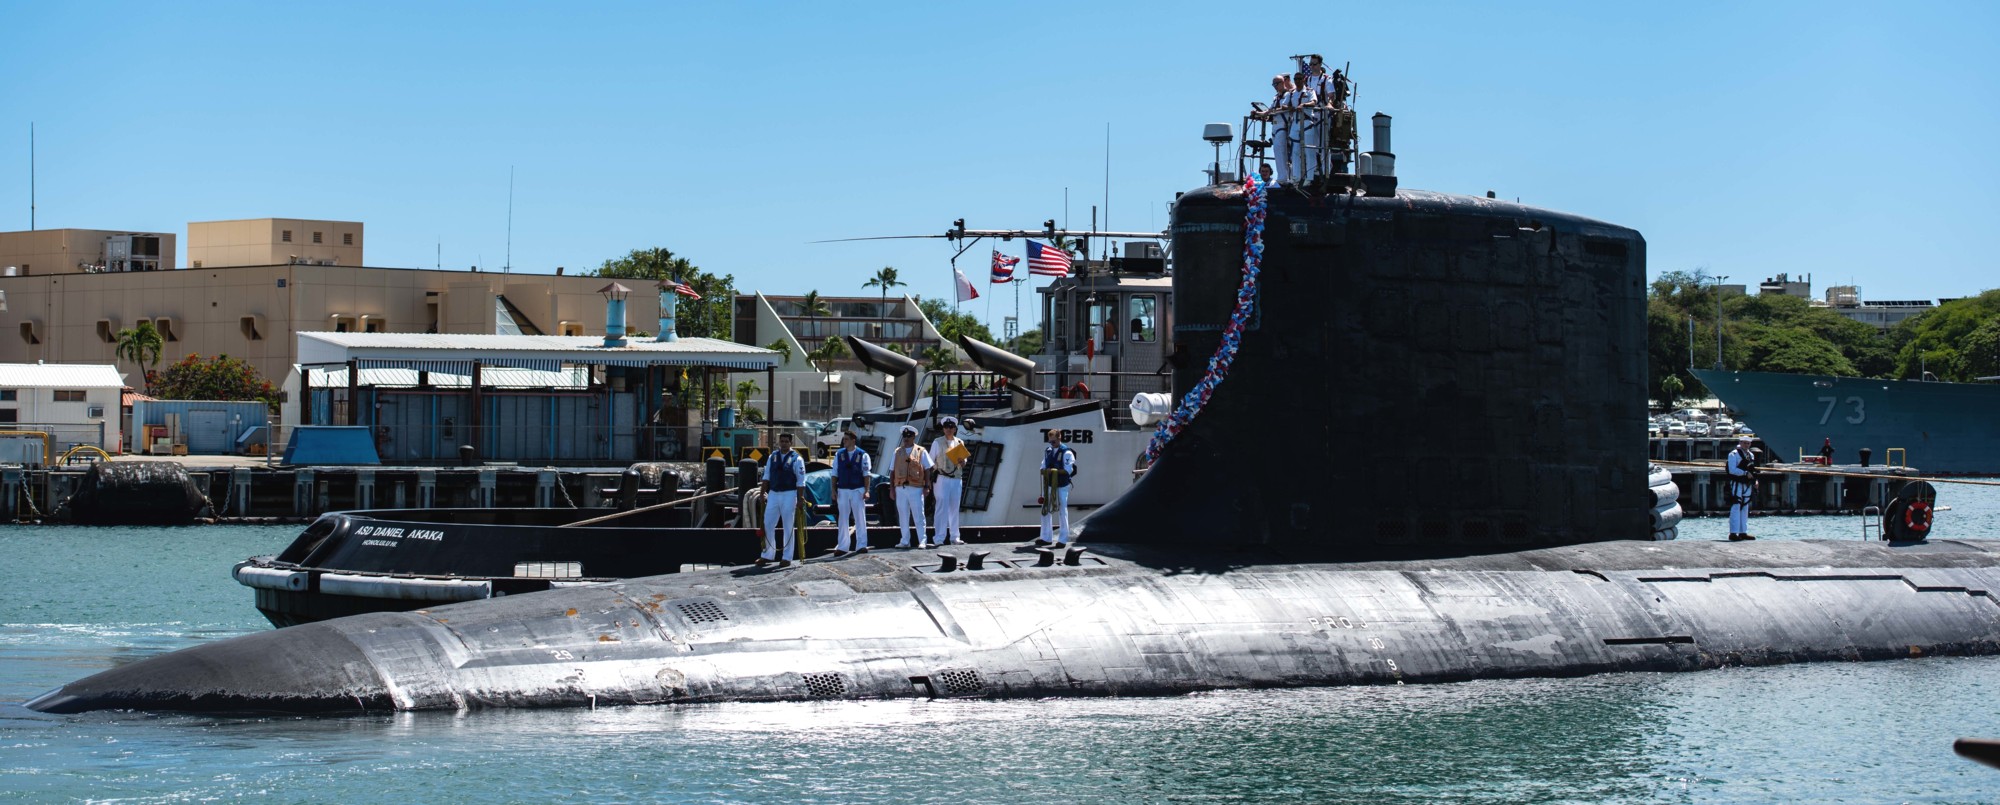 ssn-786 uss illinois virginia class attack submarine us navy 36 joint base pearl harbor hickam hawaii